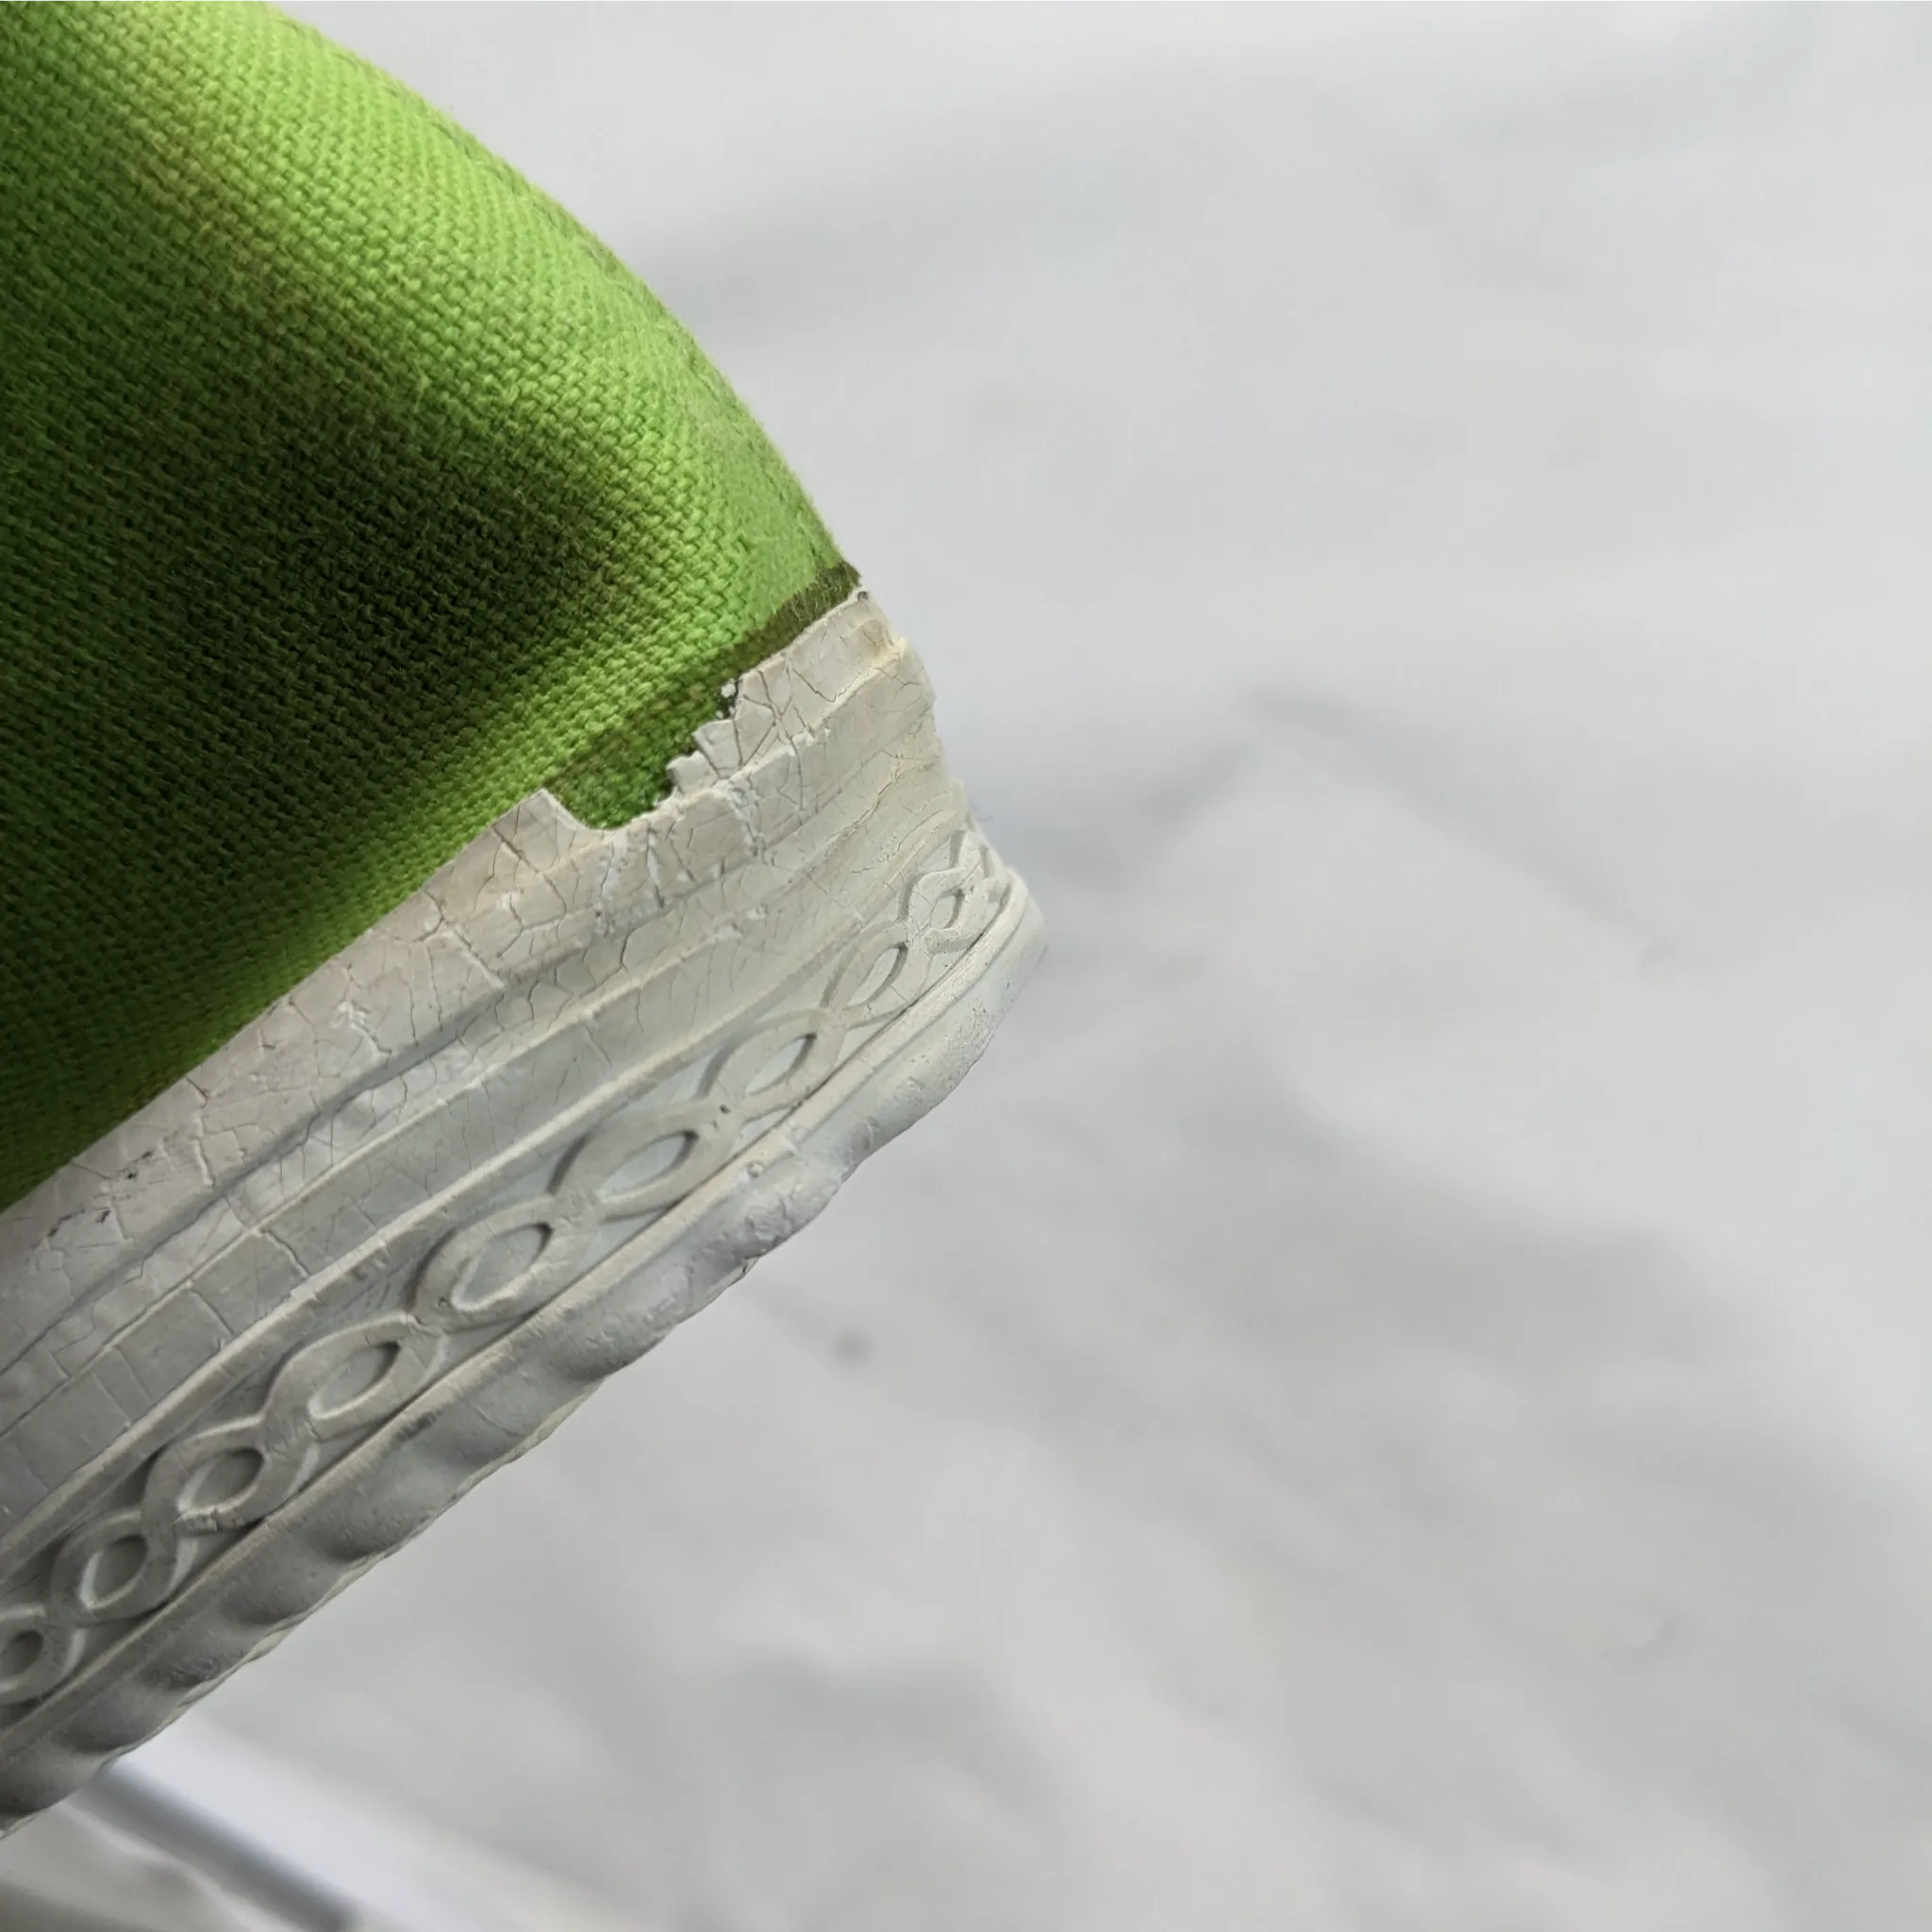 Picnic Green Sneakers